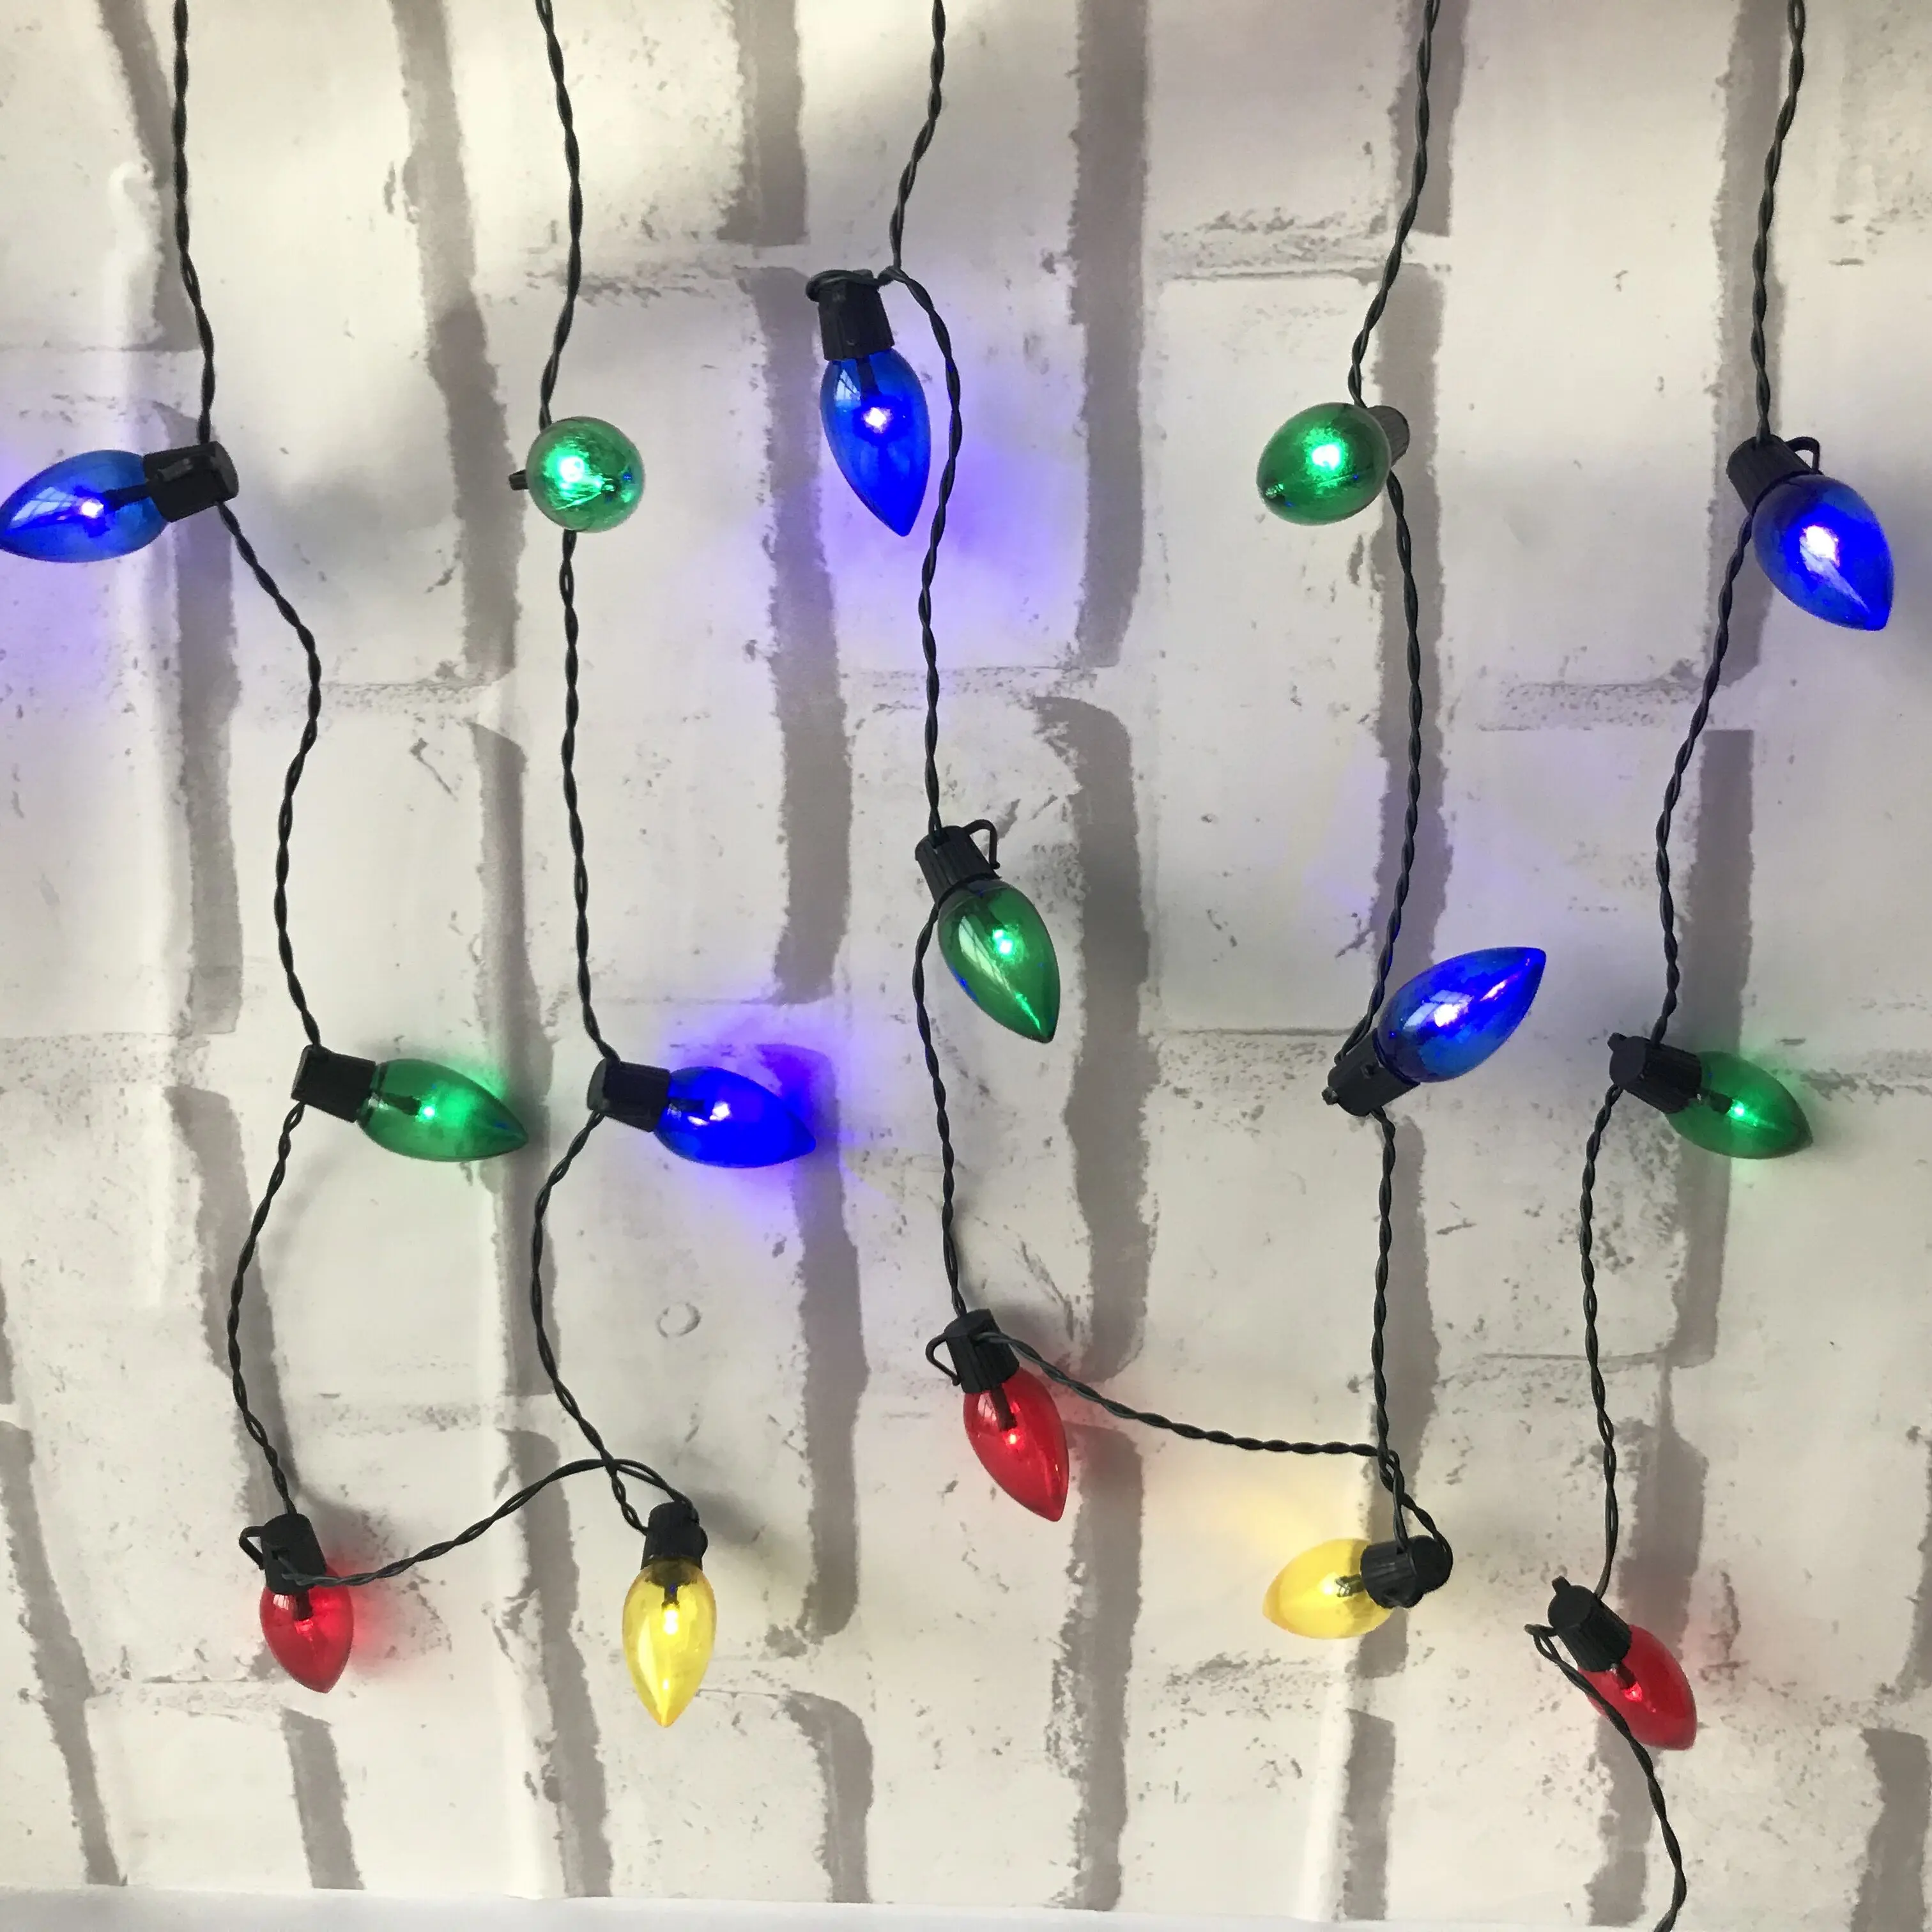 Chinese Factory C7 C9 Colored Led Christmas Lights Bulb String Decorative Festoon Lighting